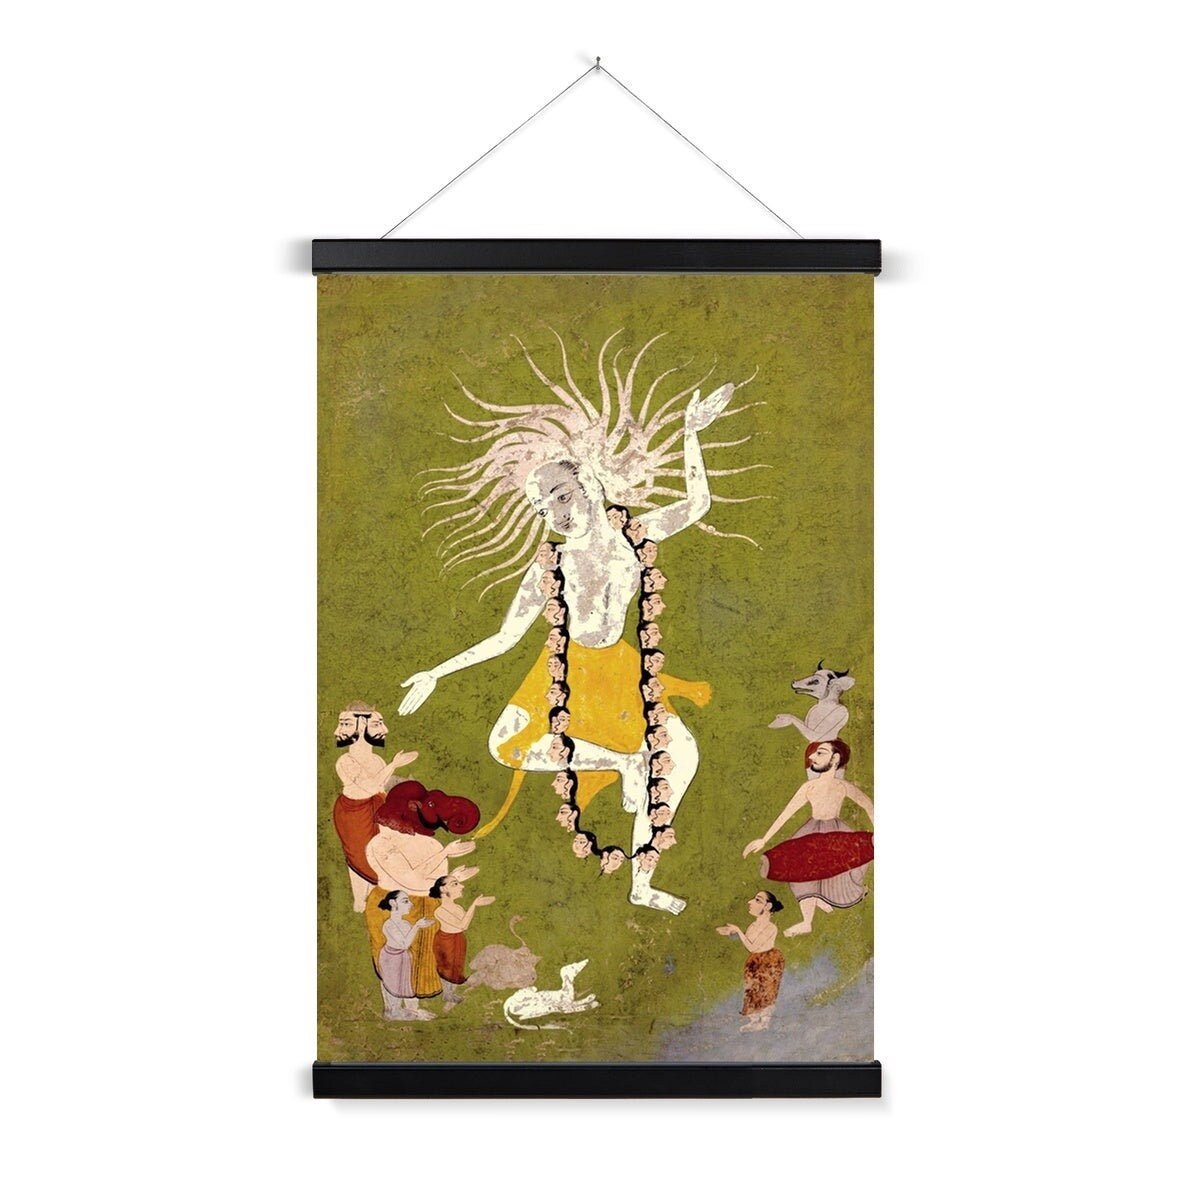 Black Frame / A4 Portrait Lord Shiva in His Ferocious Aspect as Mahakala Dancing,  Yoga Decor, Indian Folk Art, Hindu Antique Fine Art Print with Thangka-Style Hanger